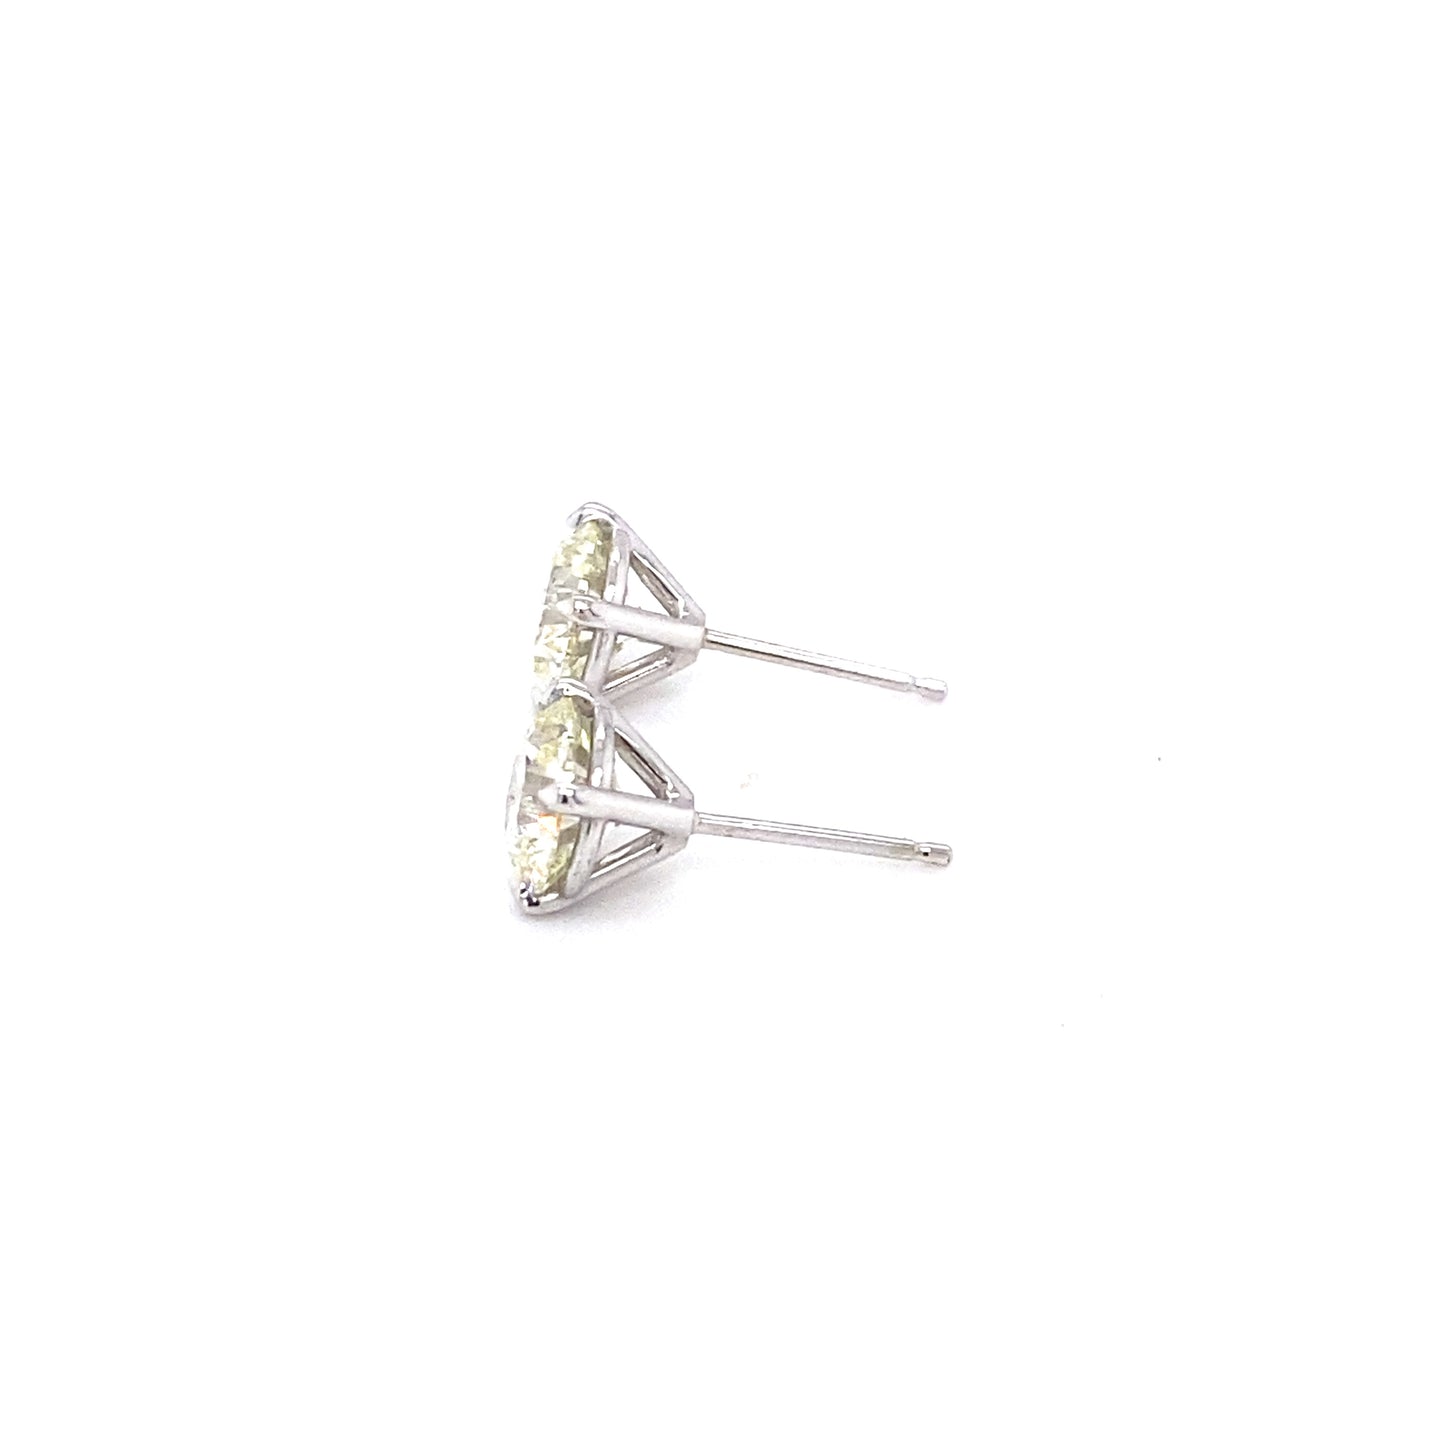 2.4 Carat Round Diamond Stud Earrings in Platinum